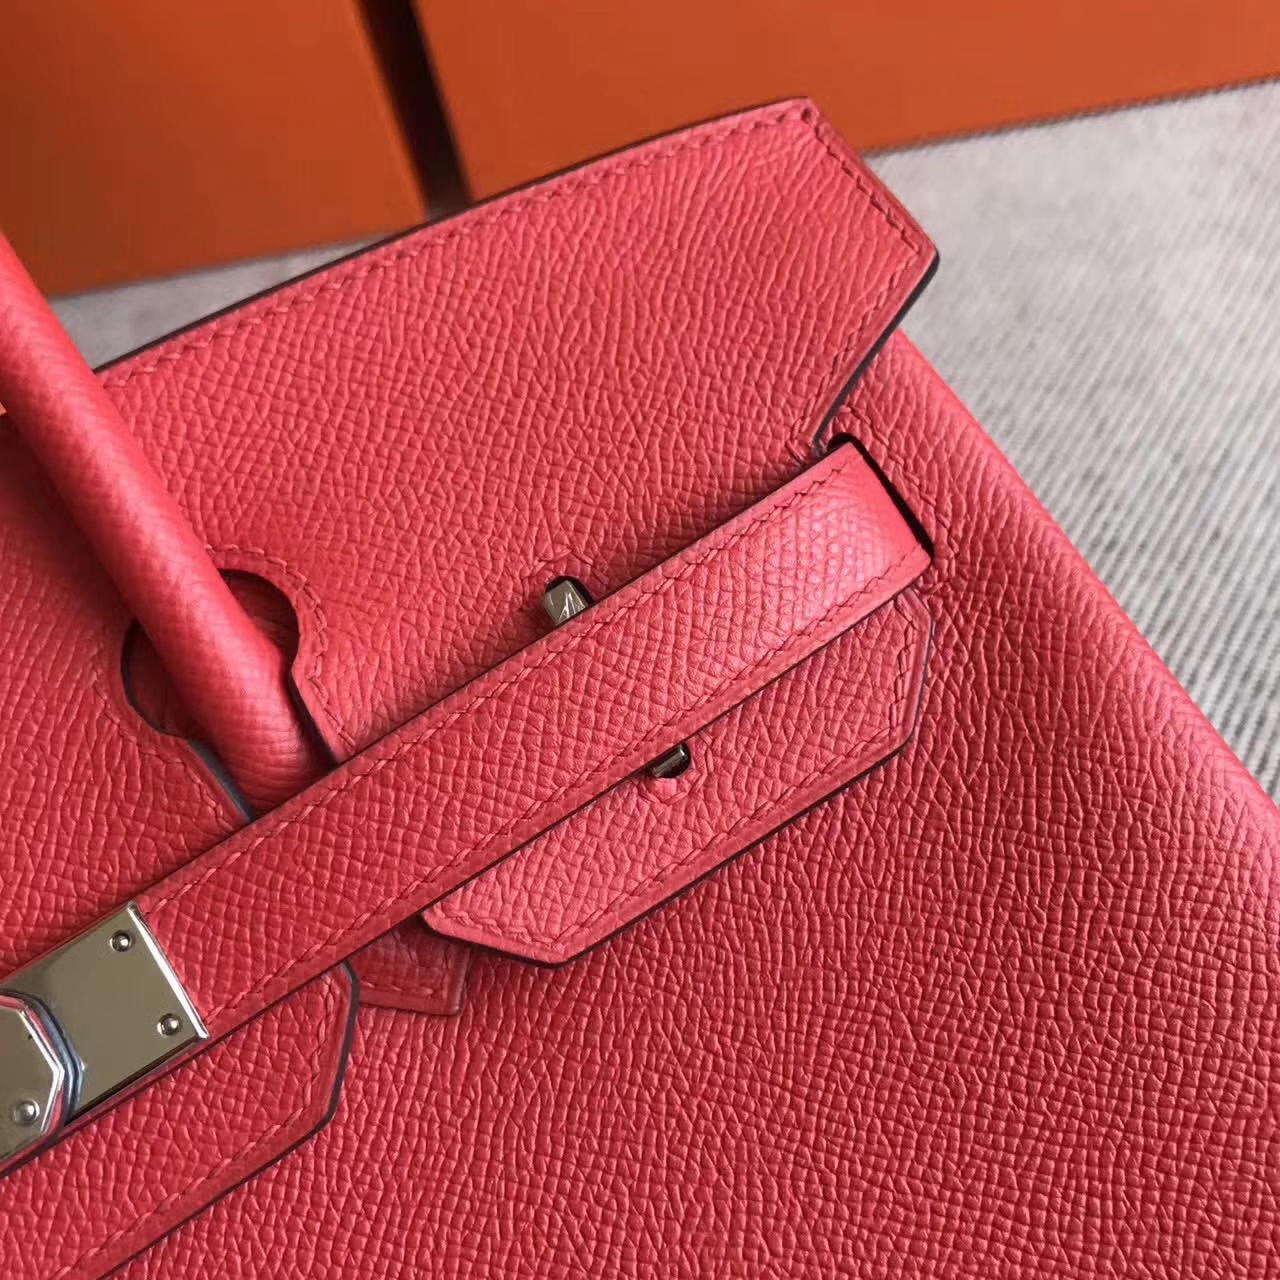 New Pretty Hermes Epsom Leather Birkin30cm Bag in T5 Peach Pink – HEMA ...